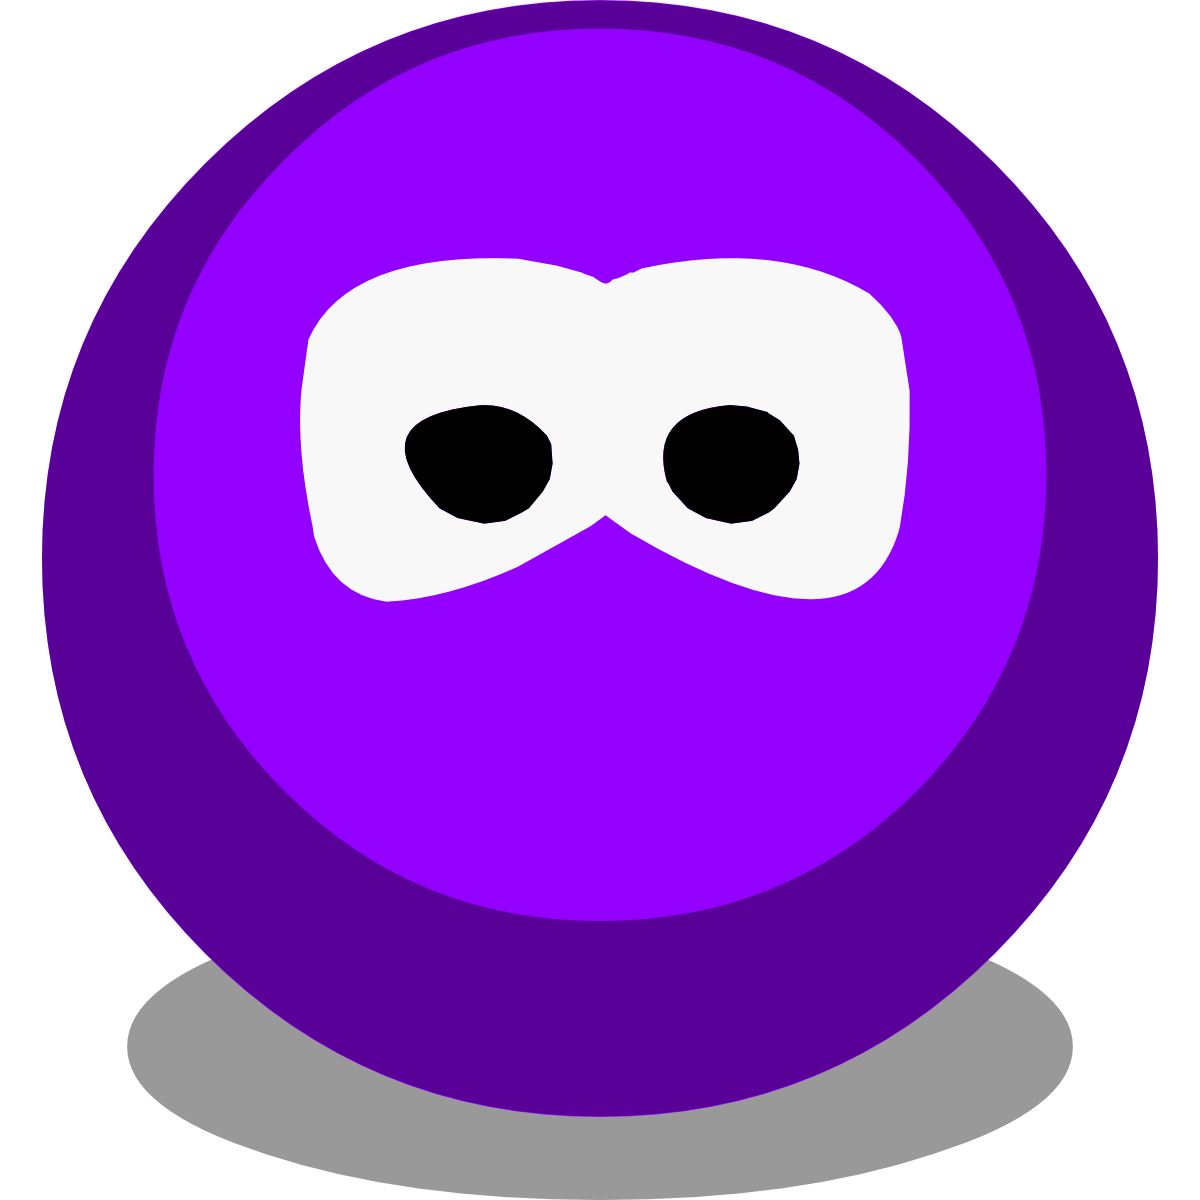 Igloo clipart colour. Image light purple color